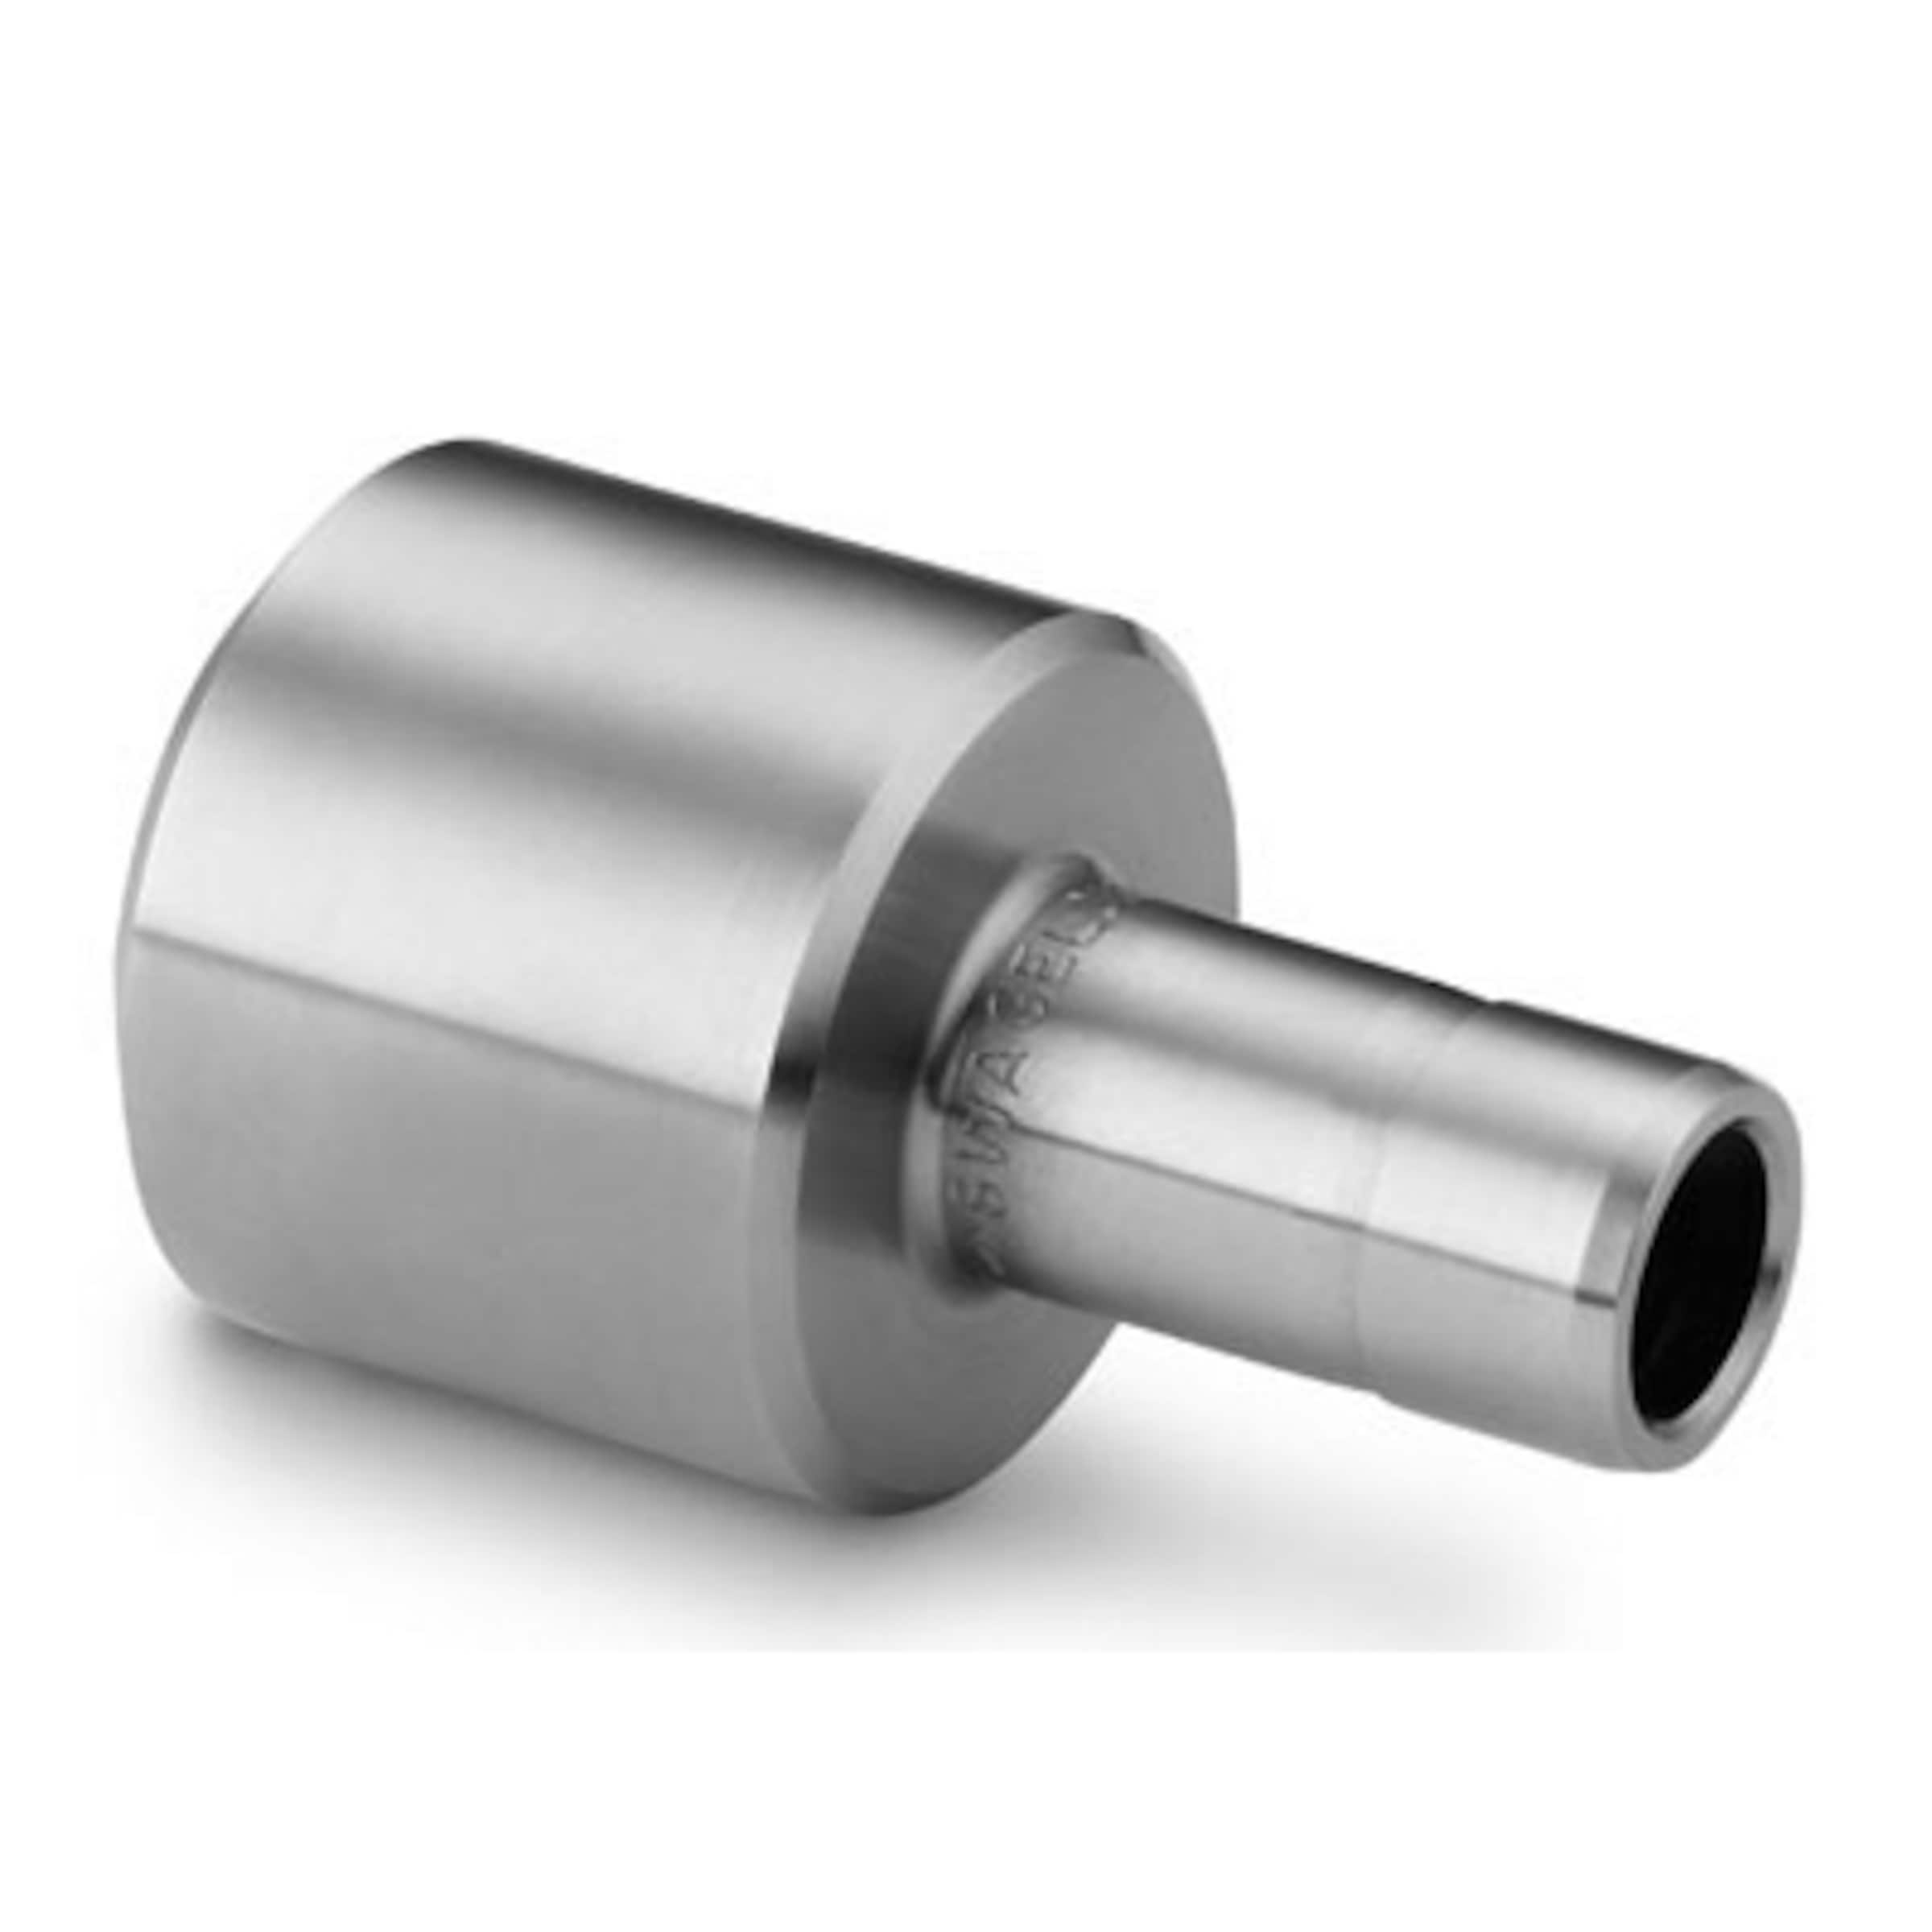 Stainless Steel Swagelok Tube Fitting, Male Tube Adapter, 3/8 in